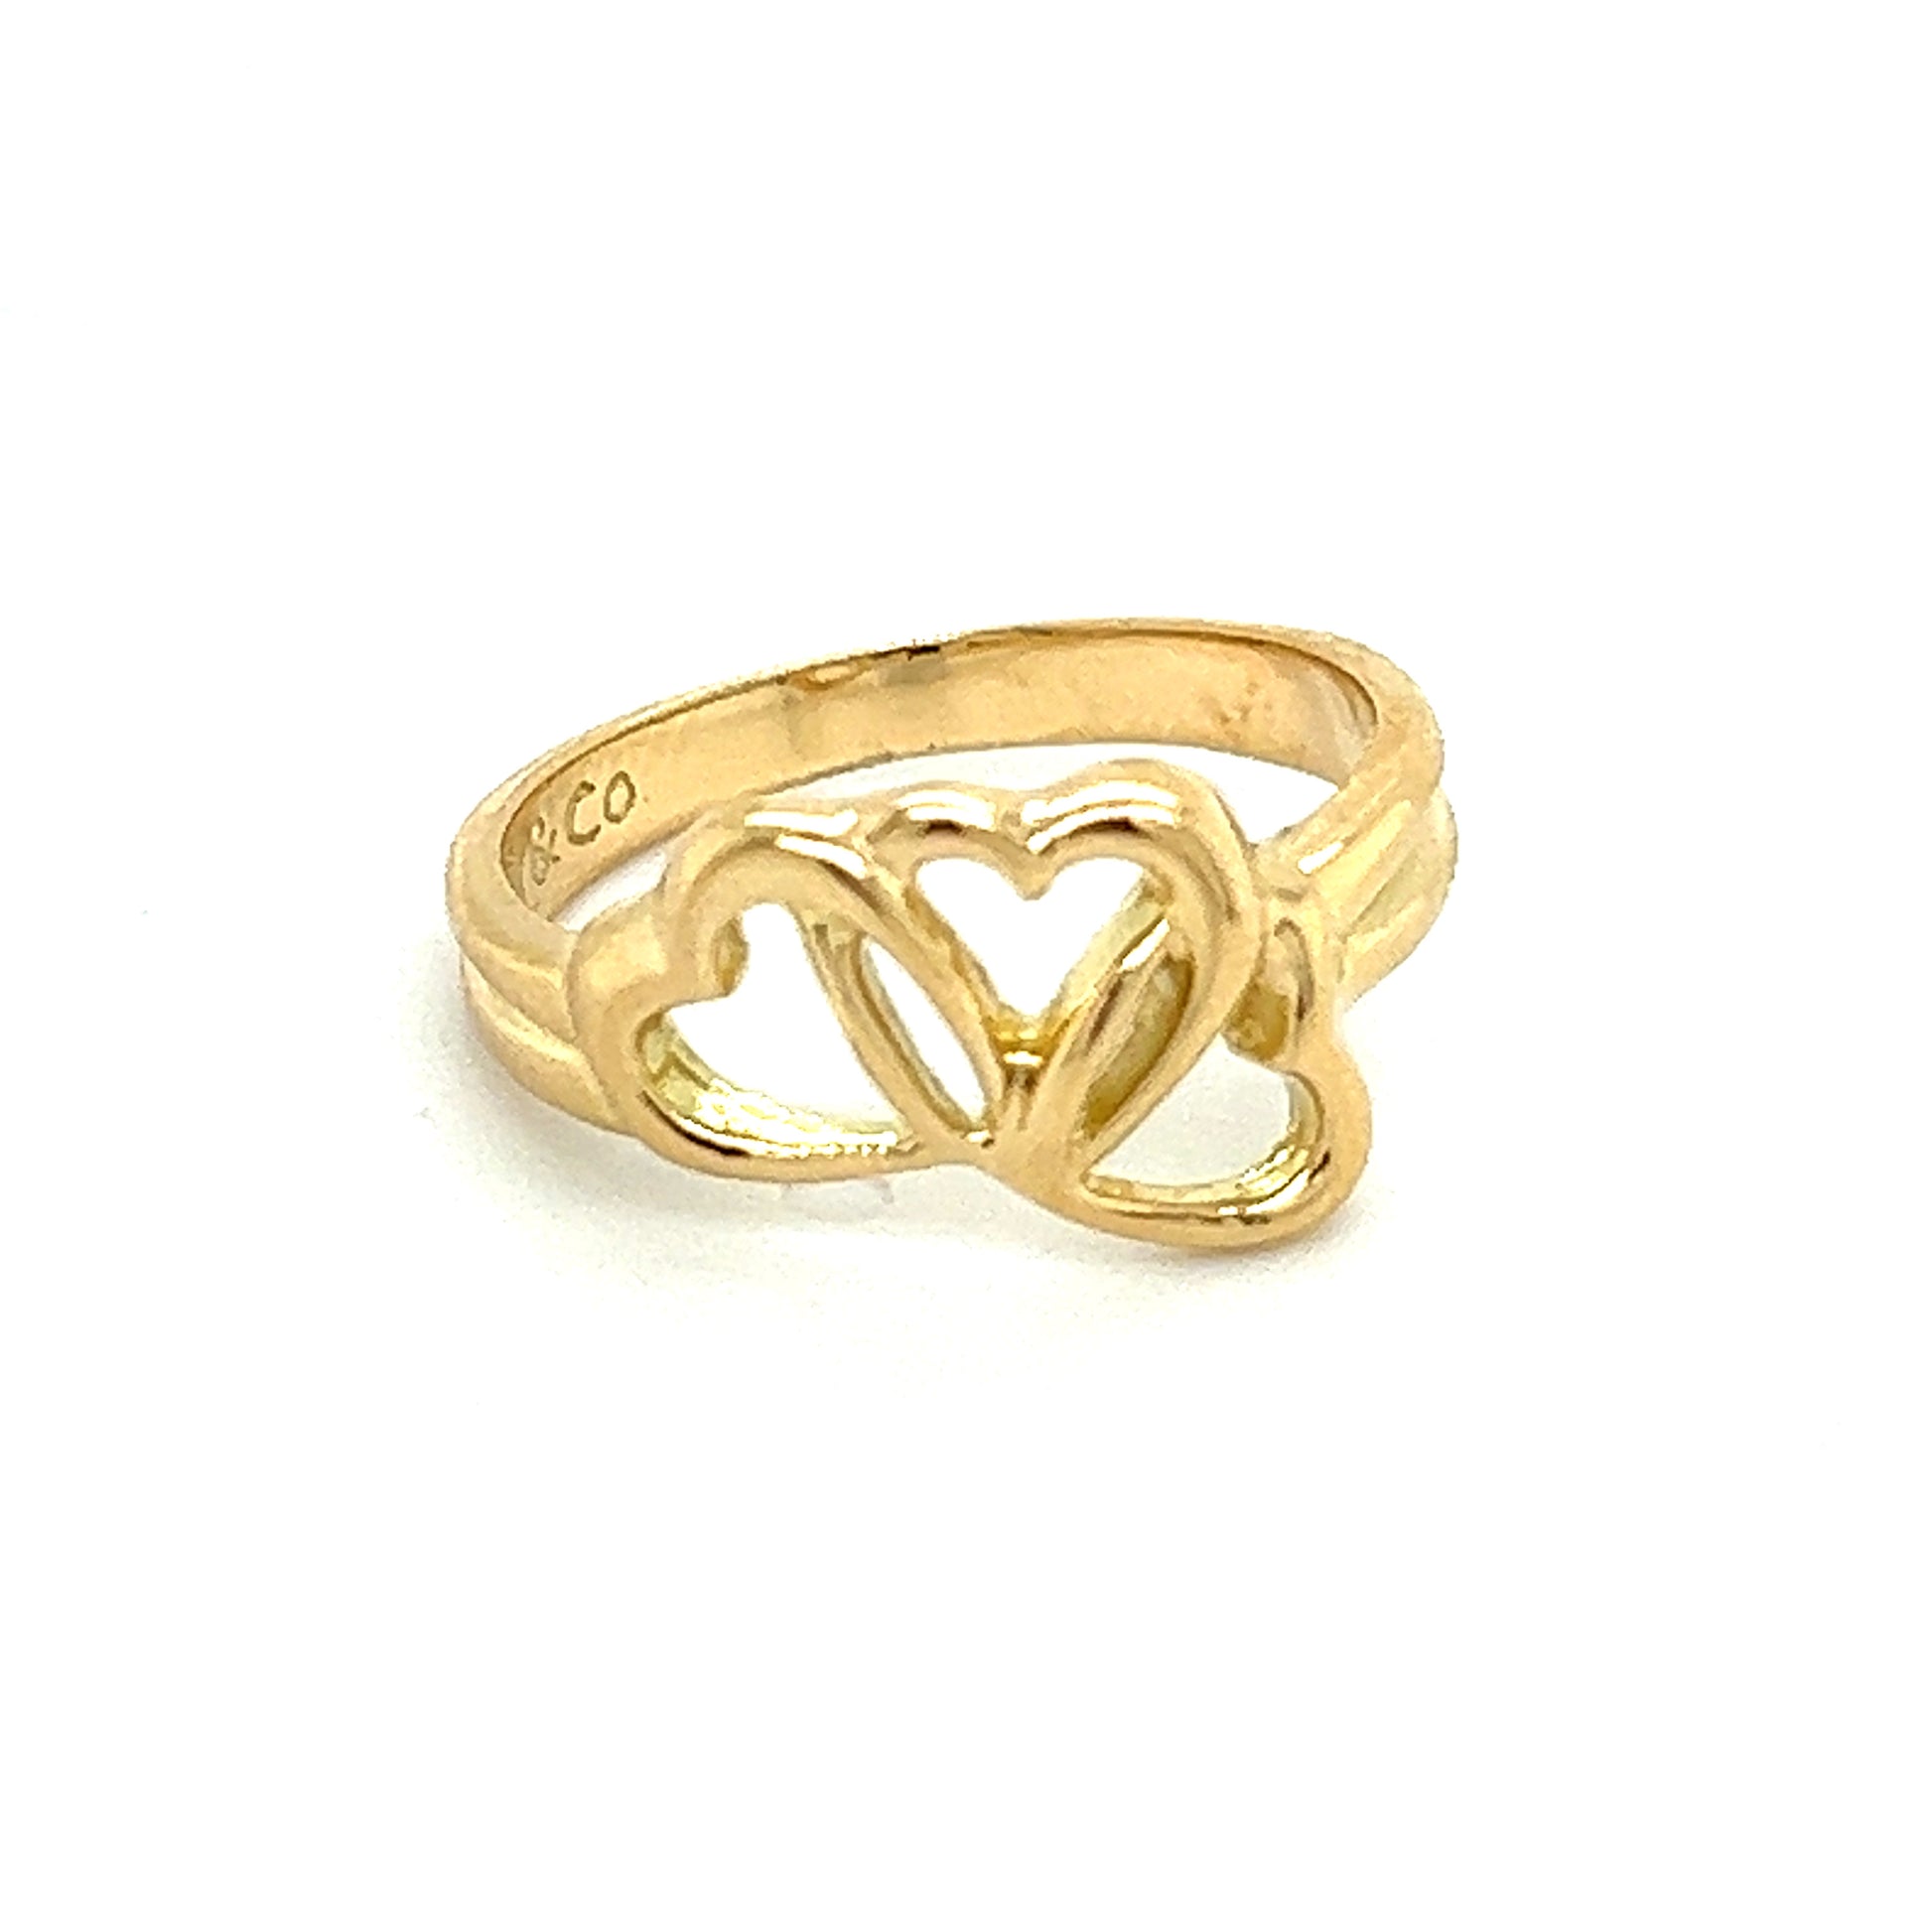 Tiffany & Co Estate Ring Size 5.5 18k Y Gold TIF326 - Certified Fine Jewelry